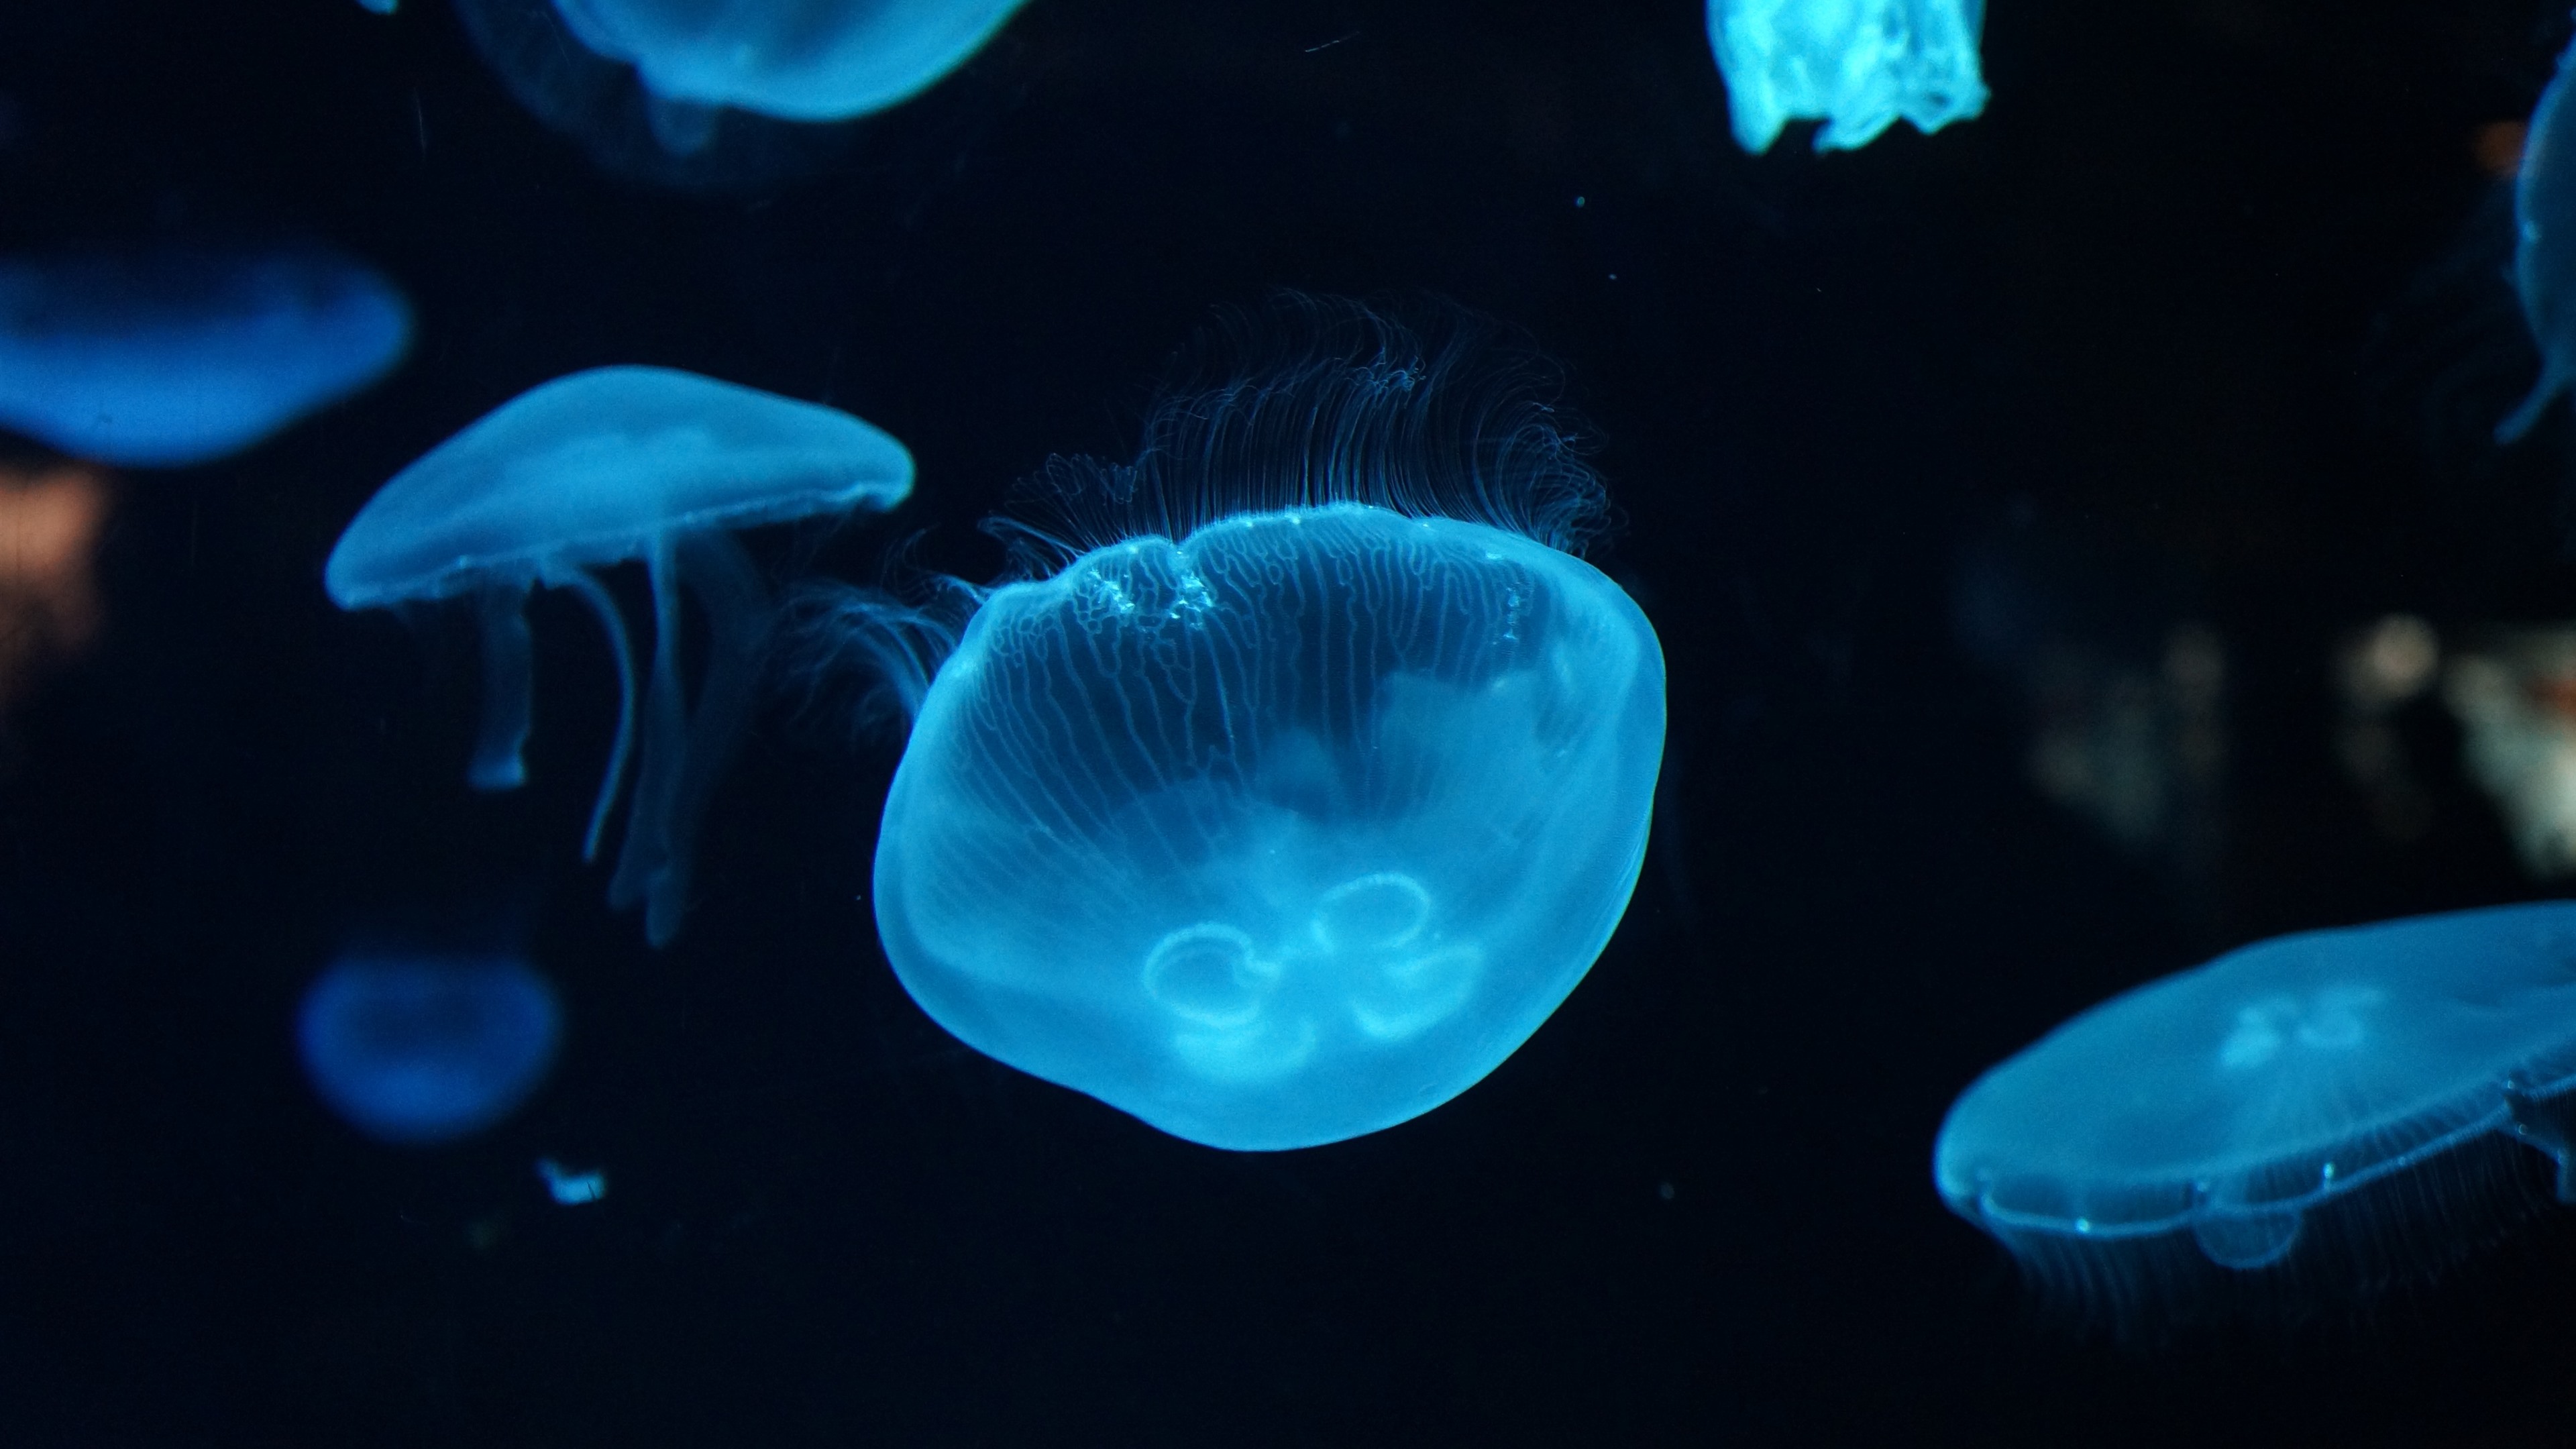 Wallpaper Beautiful blue jellyfish, underwater 3840x2160 UHD 4K Picture, Image